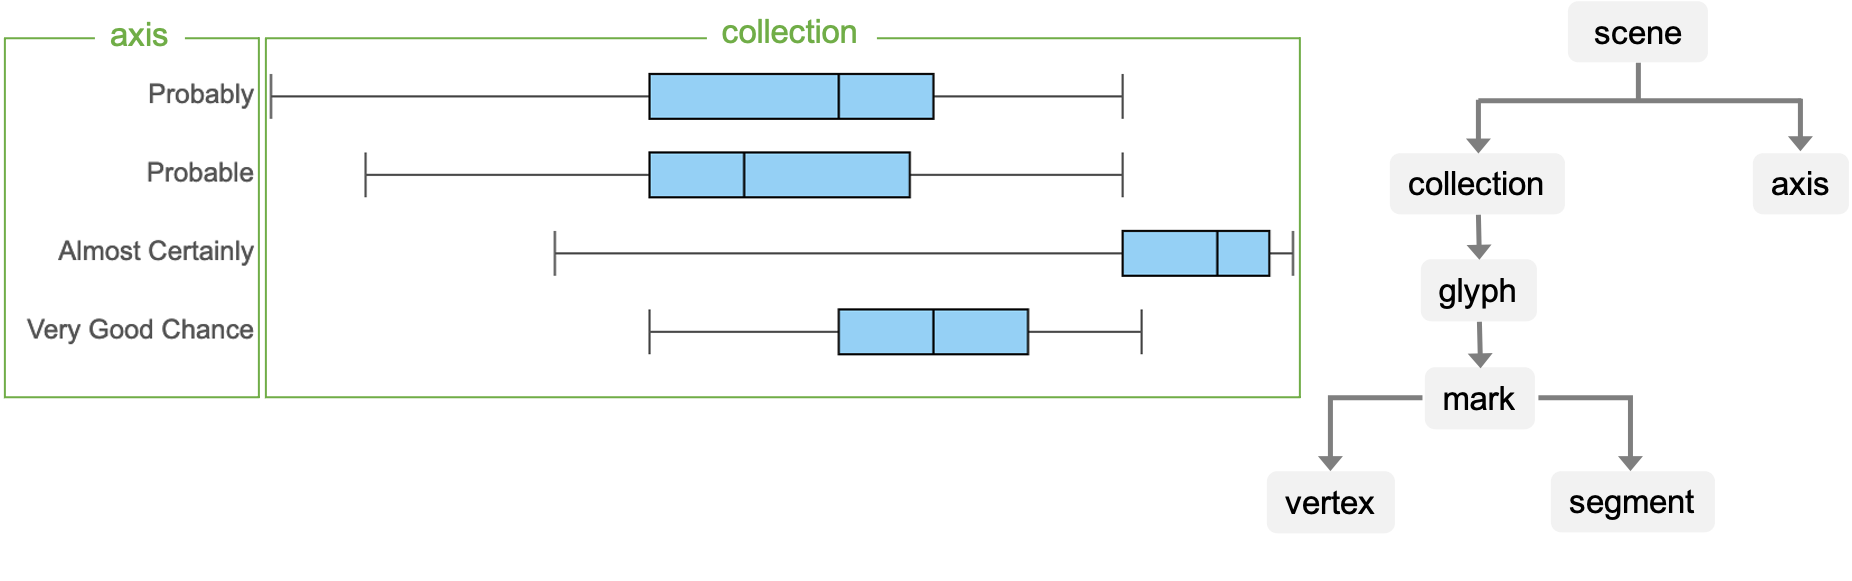 Visualization Object Model of a Box Plot